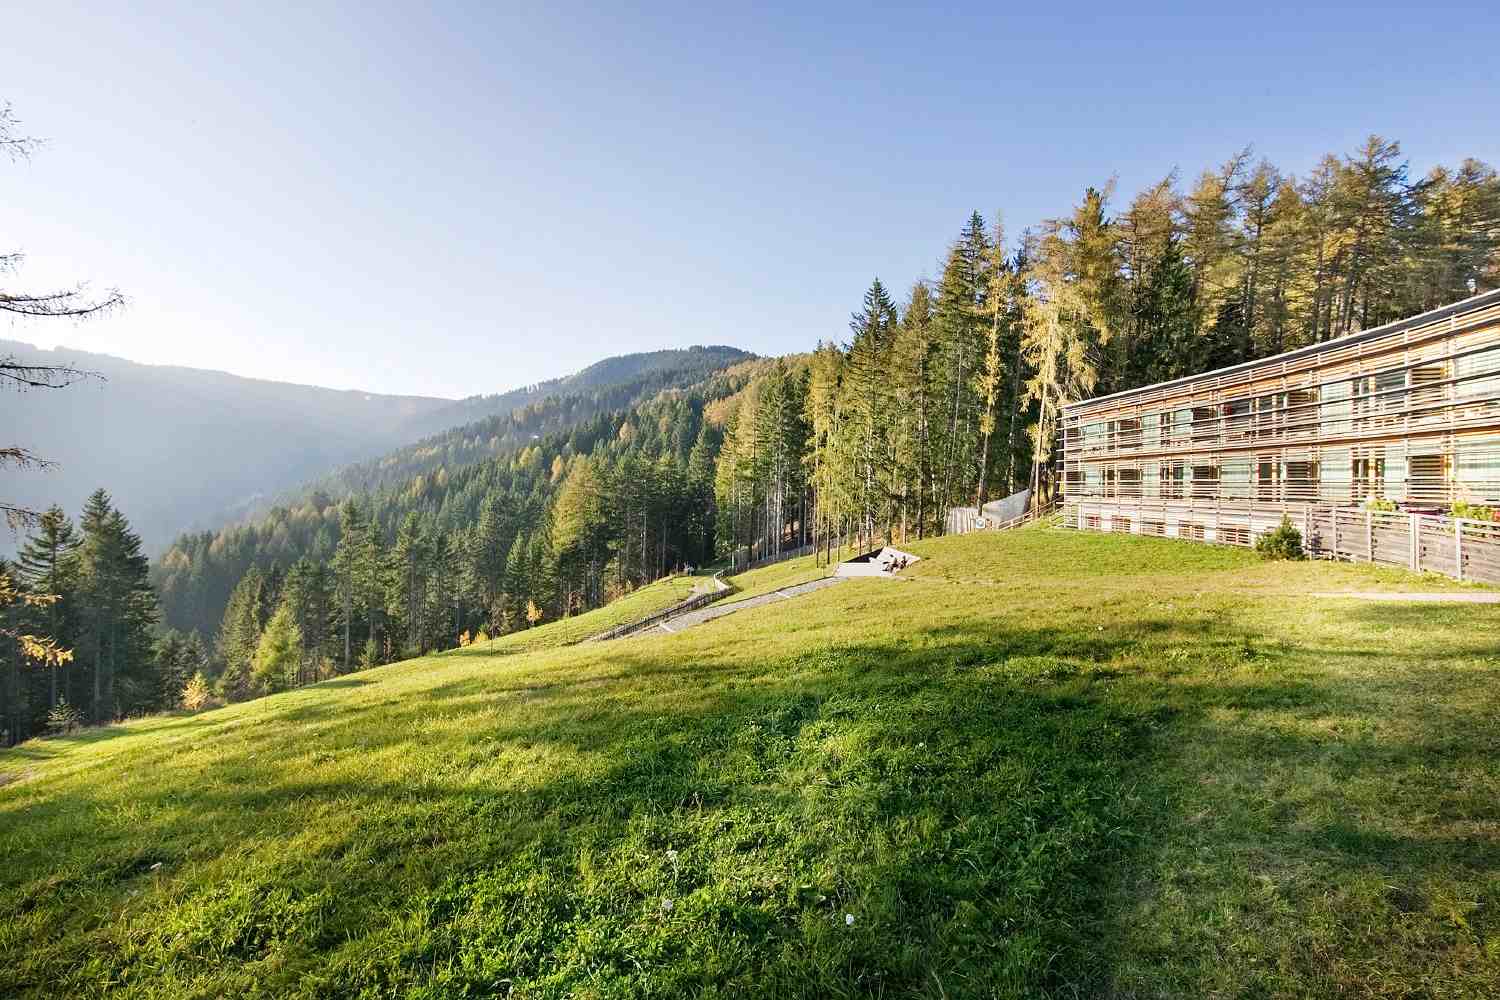 Vigilius Mountain Resort Lana, Trentino Alto Adige - Italy